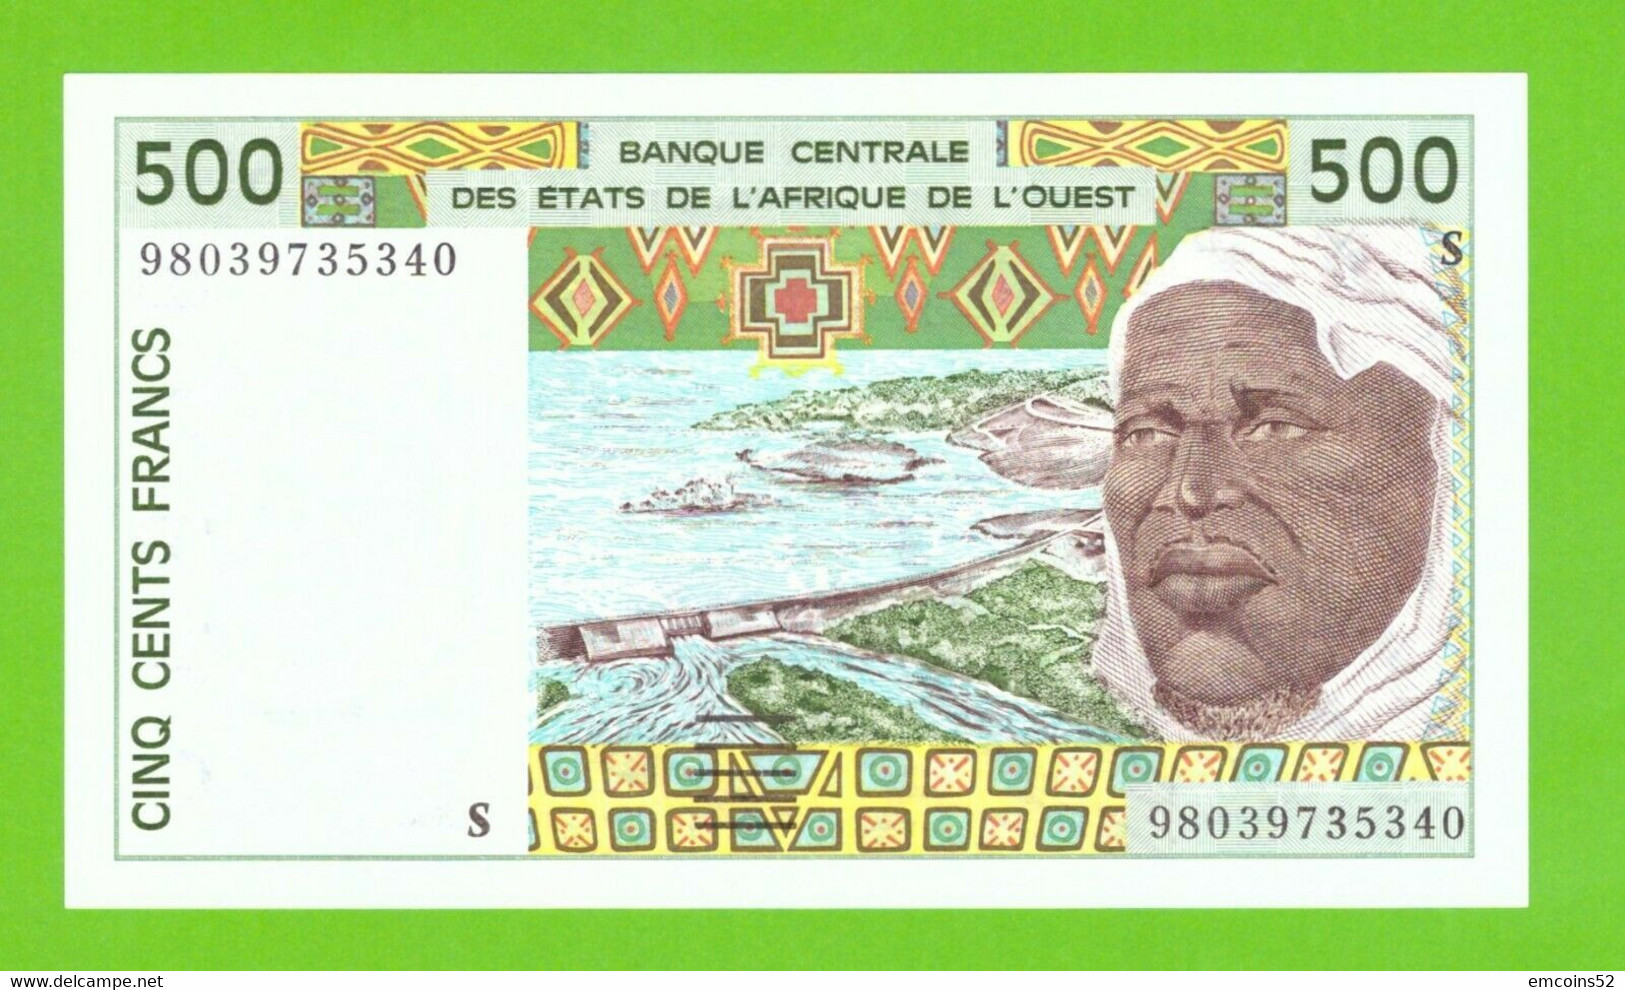 GUINEA BISSAU W.A.S. 500 PESOS 1998  P-910Sc  UNC - Guinea-Bissau